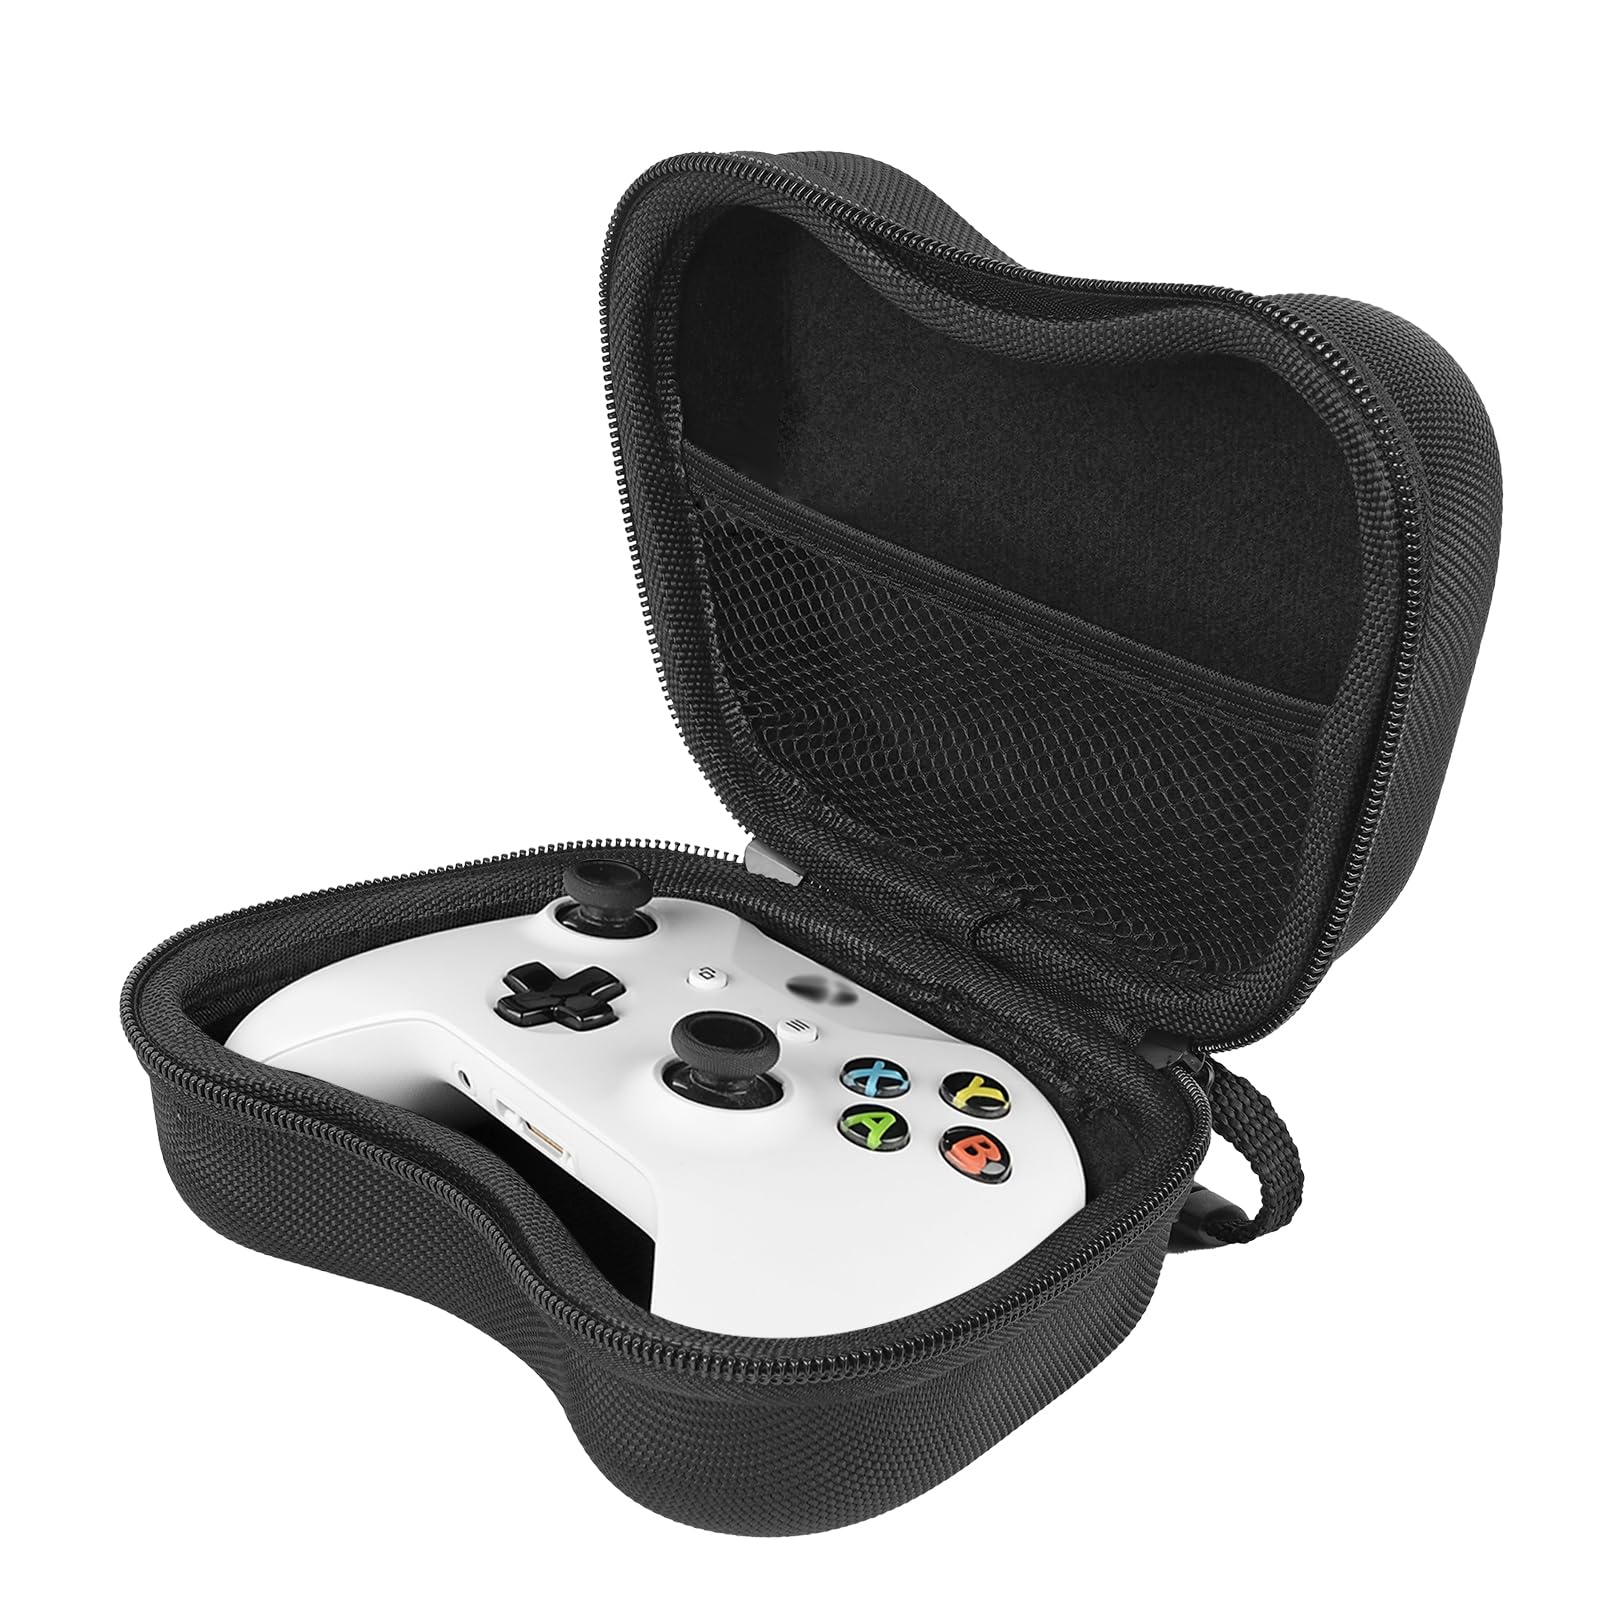 Xbox One controller reset button